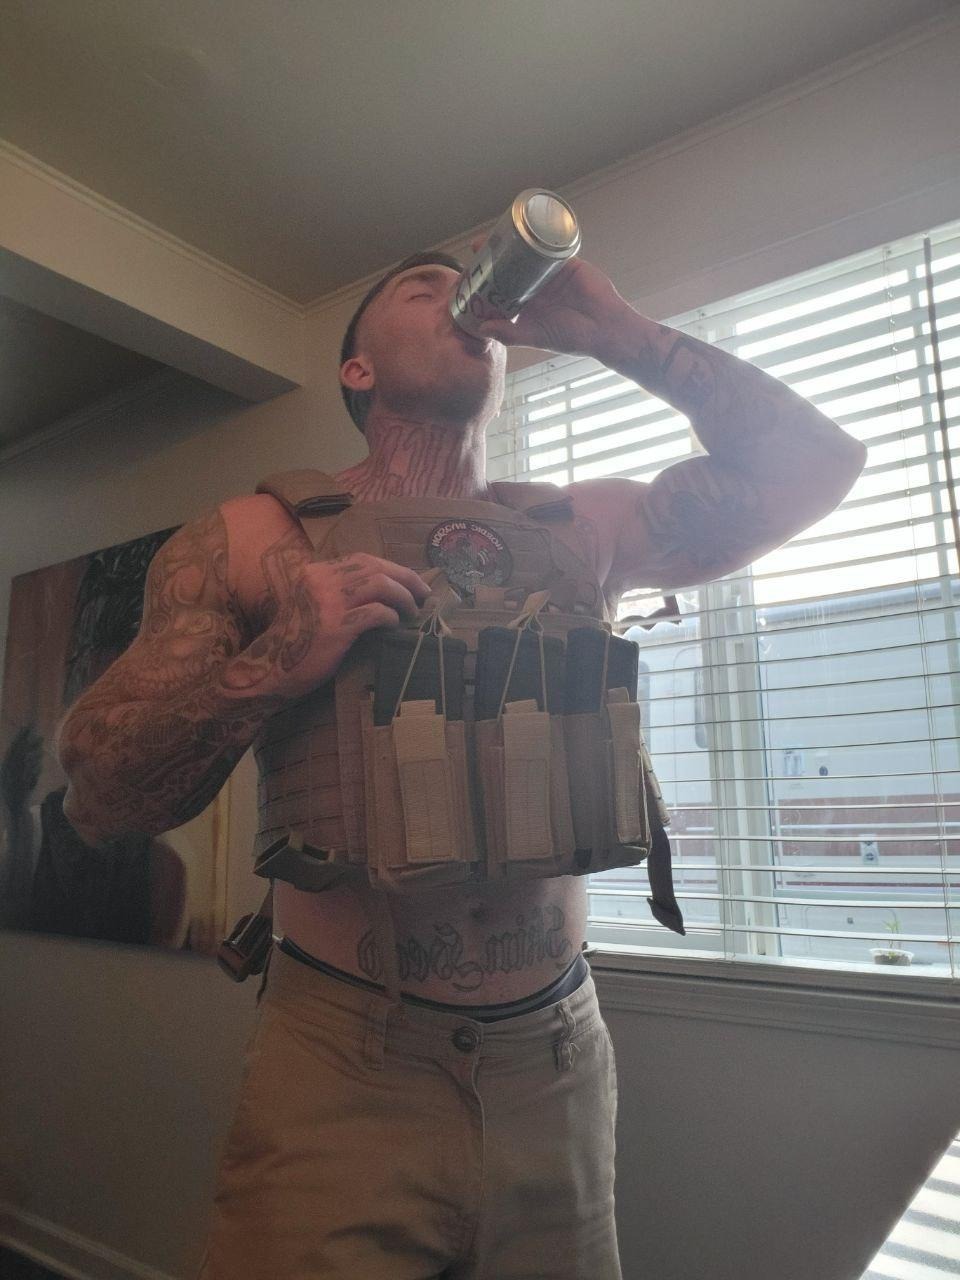 Daniel Rowe pictured wearing body armor. (Telegram)